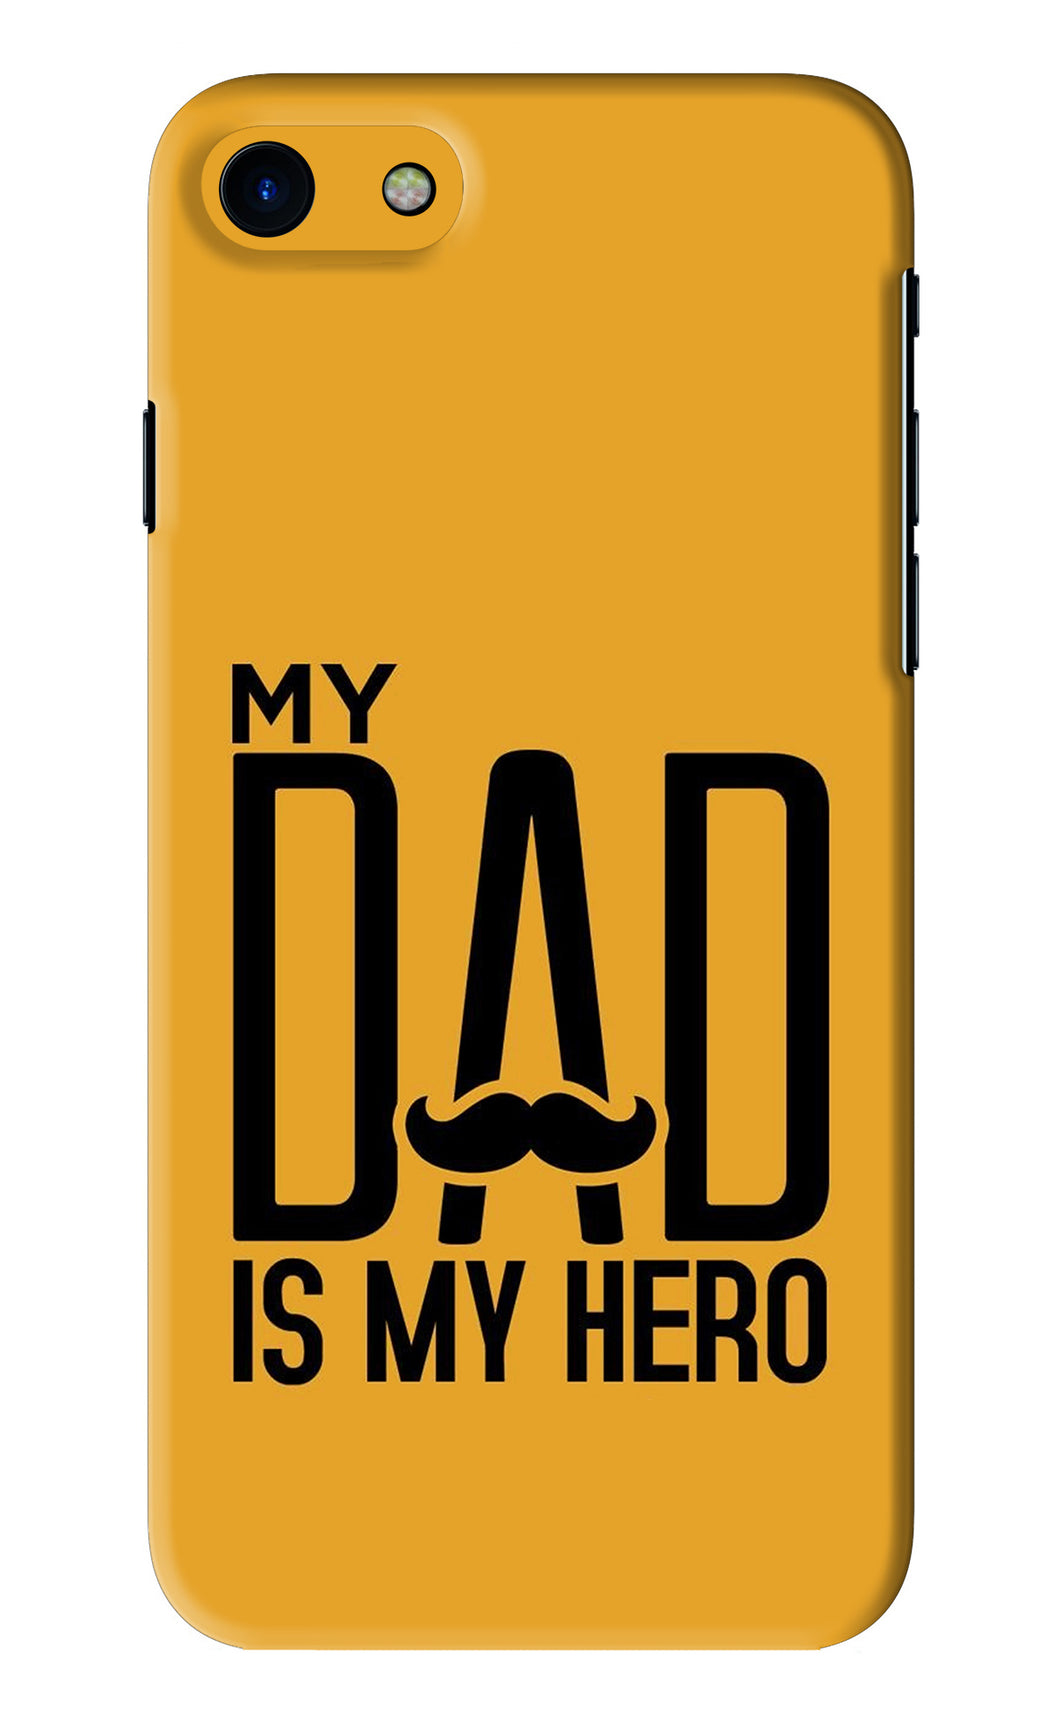 My Dad Is My Hero iPhone 8 Back Skin Wrap